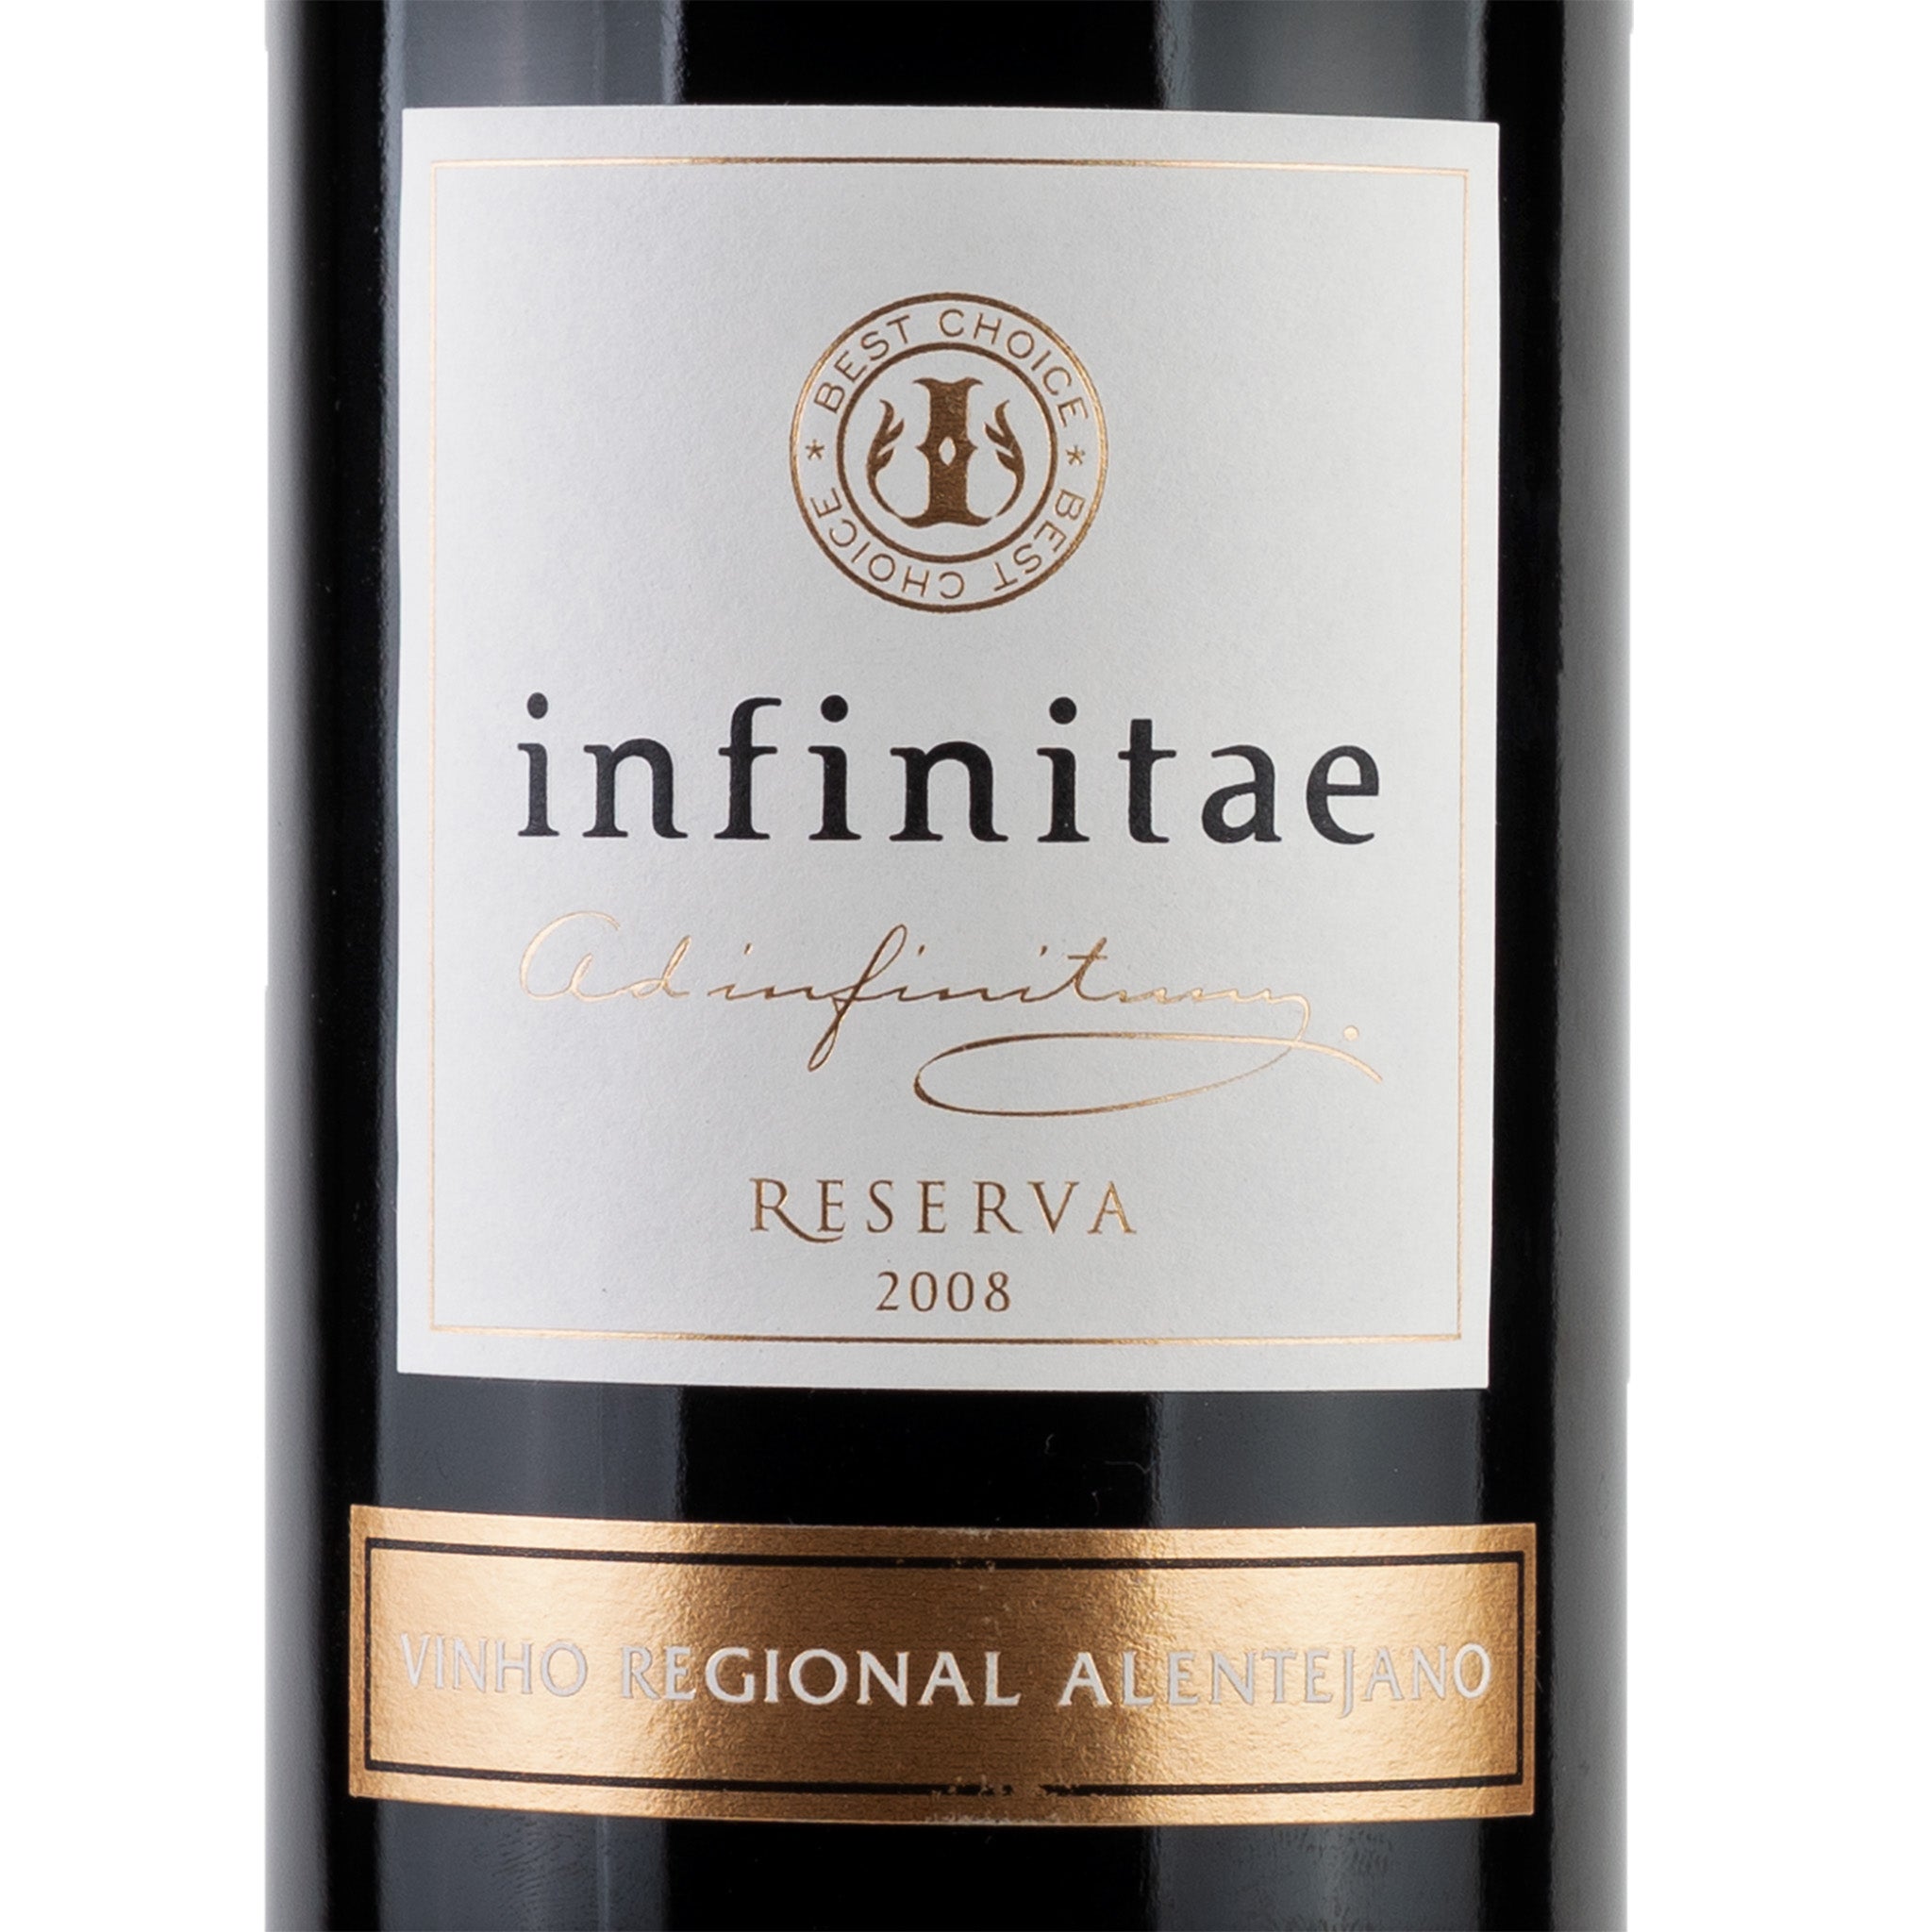 Buy Infinitae Reserva Vinho Regional Alentejano Tinto 2008 | Just Wine